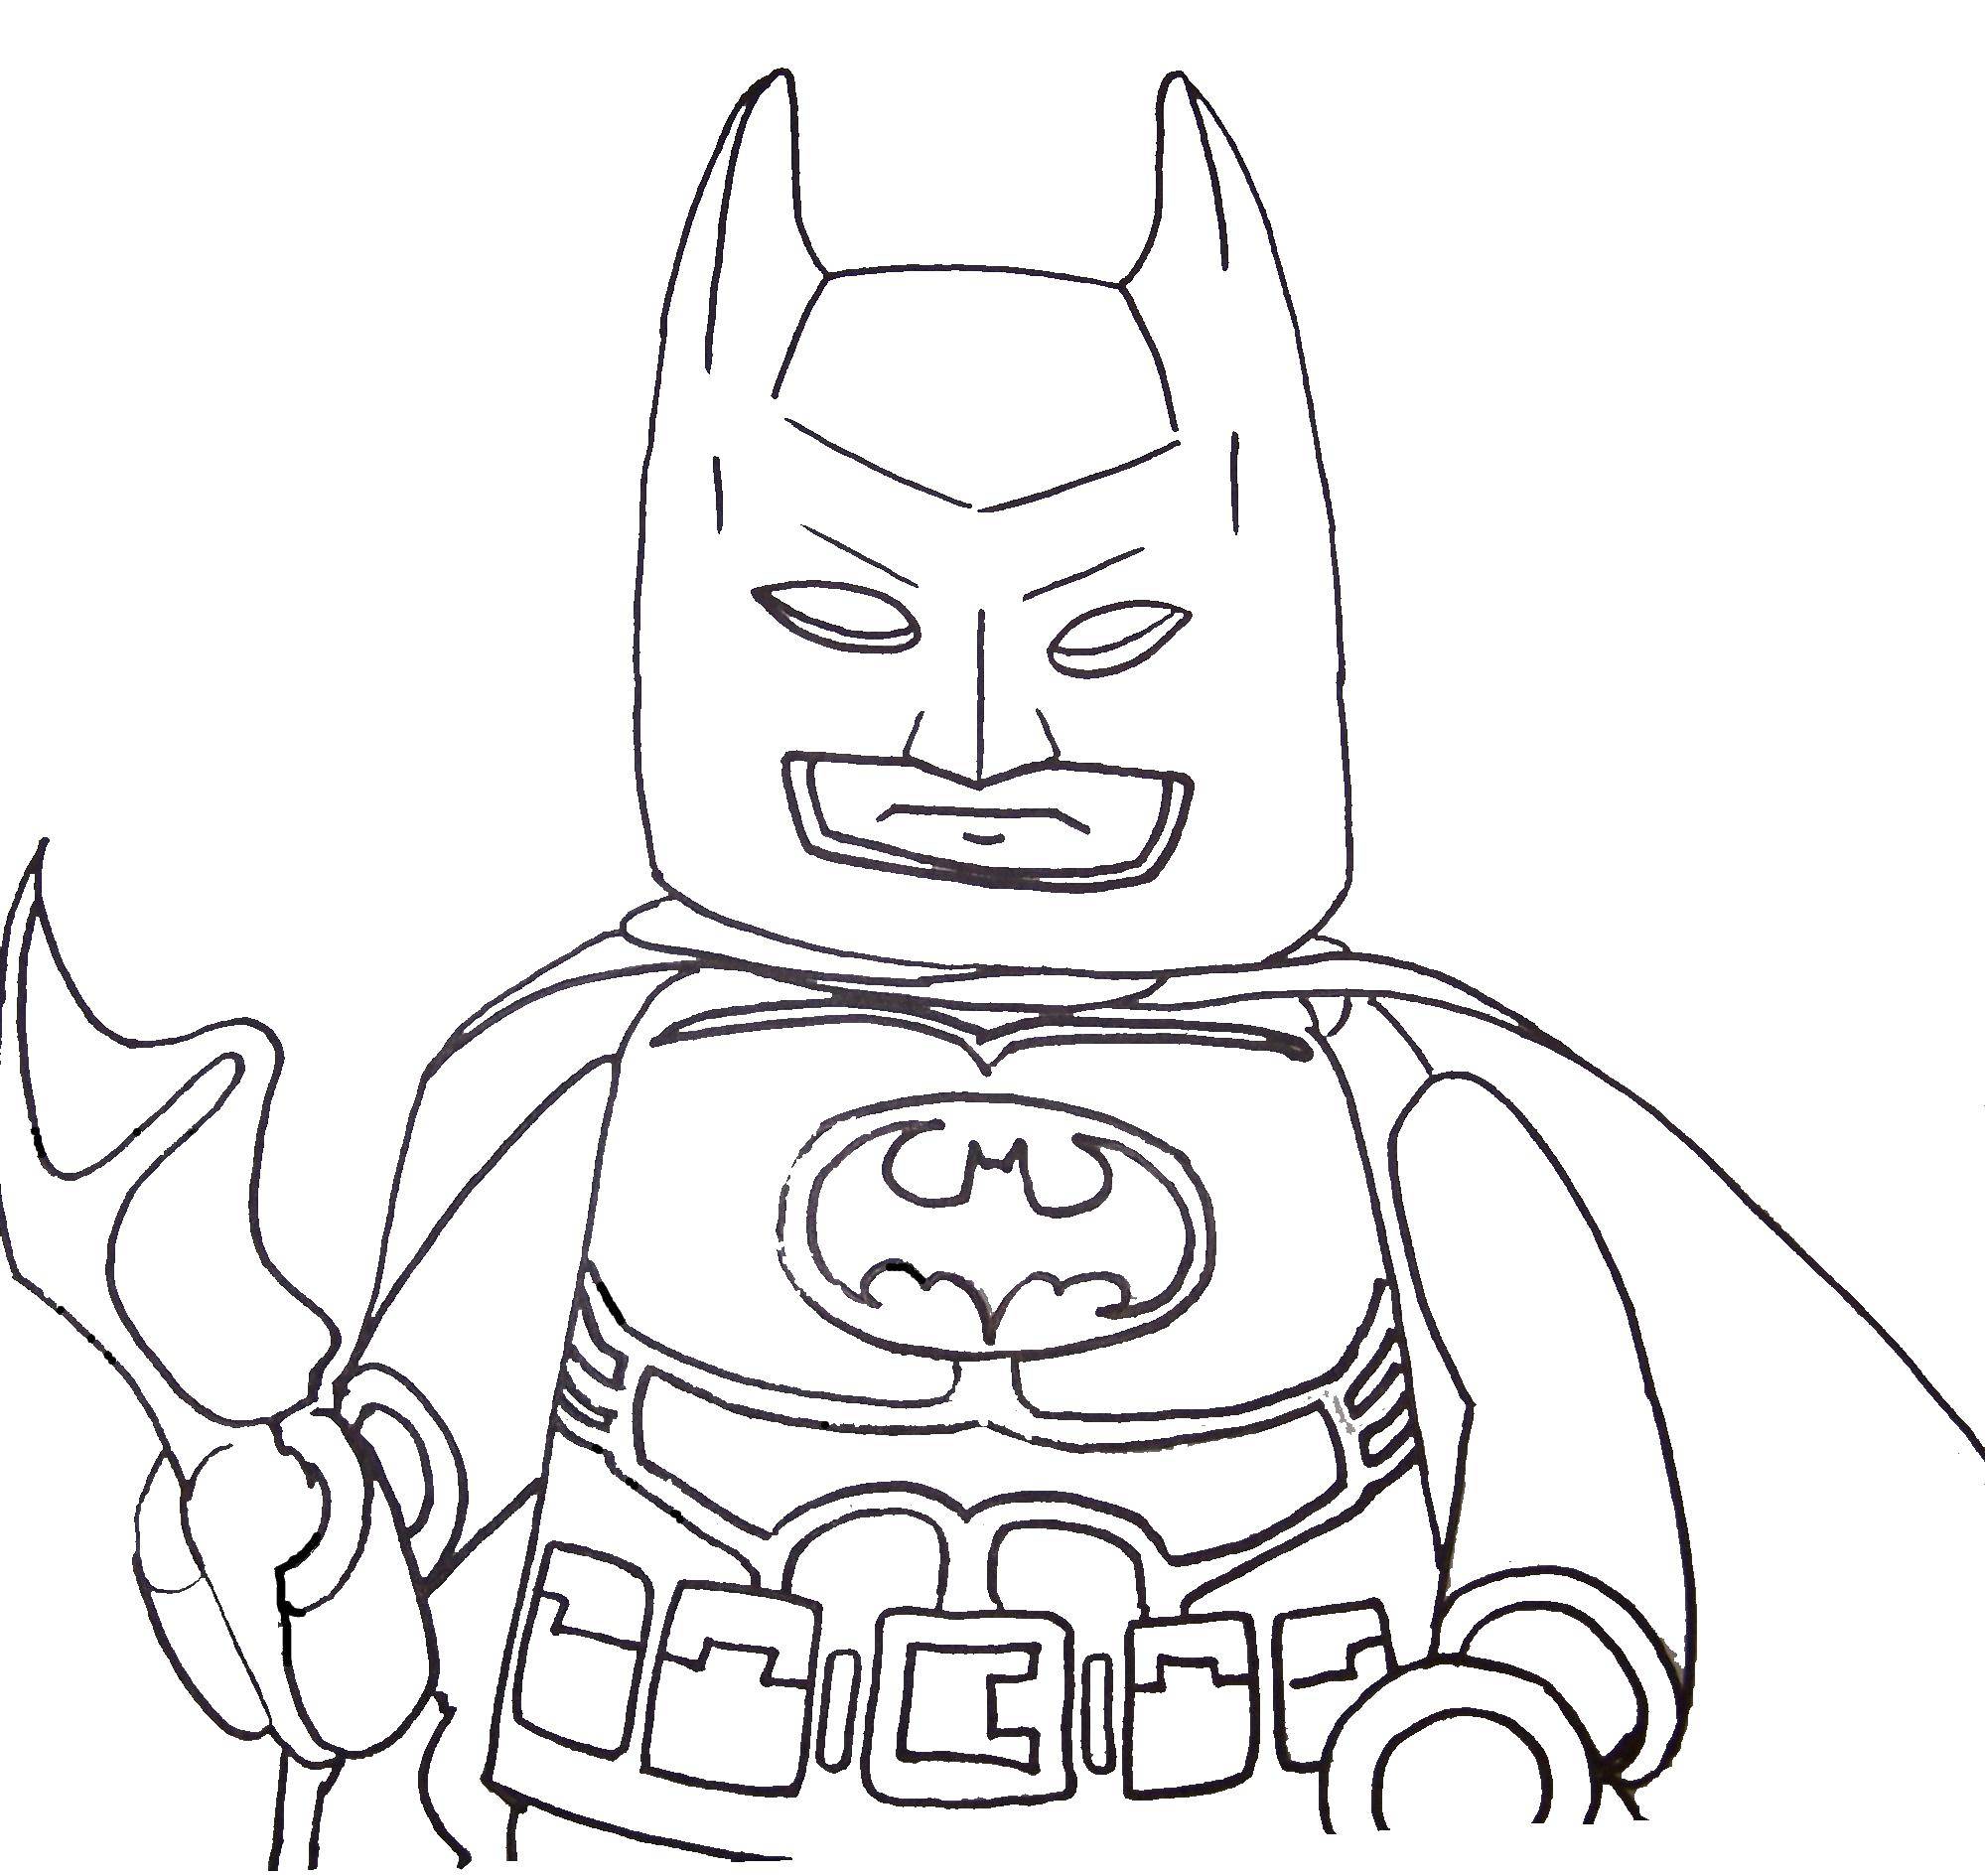 Название: Раскраска Лего бэтмен. Категория: Лего. Теги: лего, бэтмен.